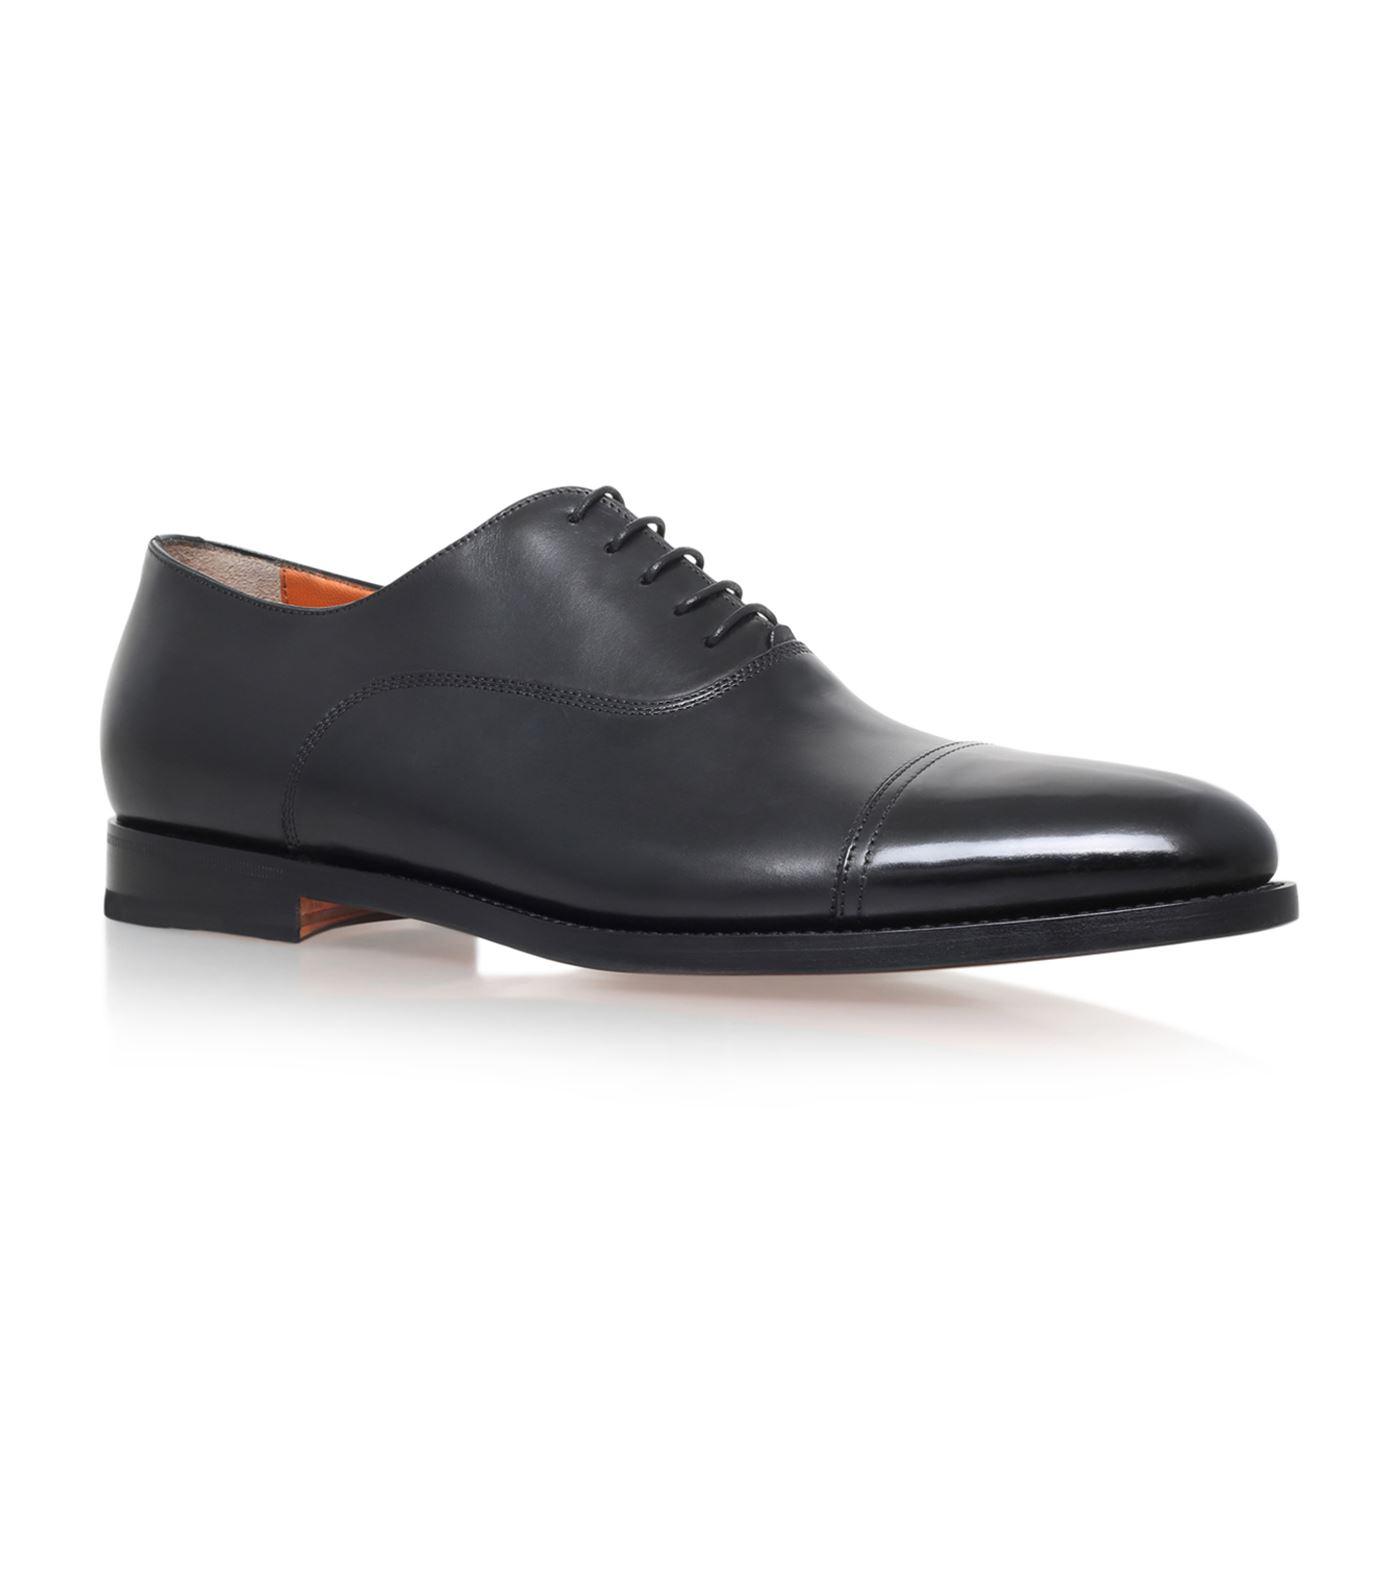 Lyst - Santoni Wilson Oxford Shoes in Black for Men